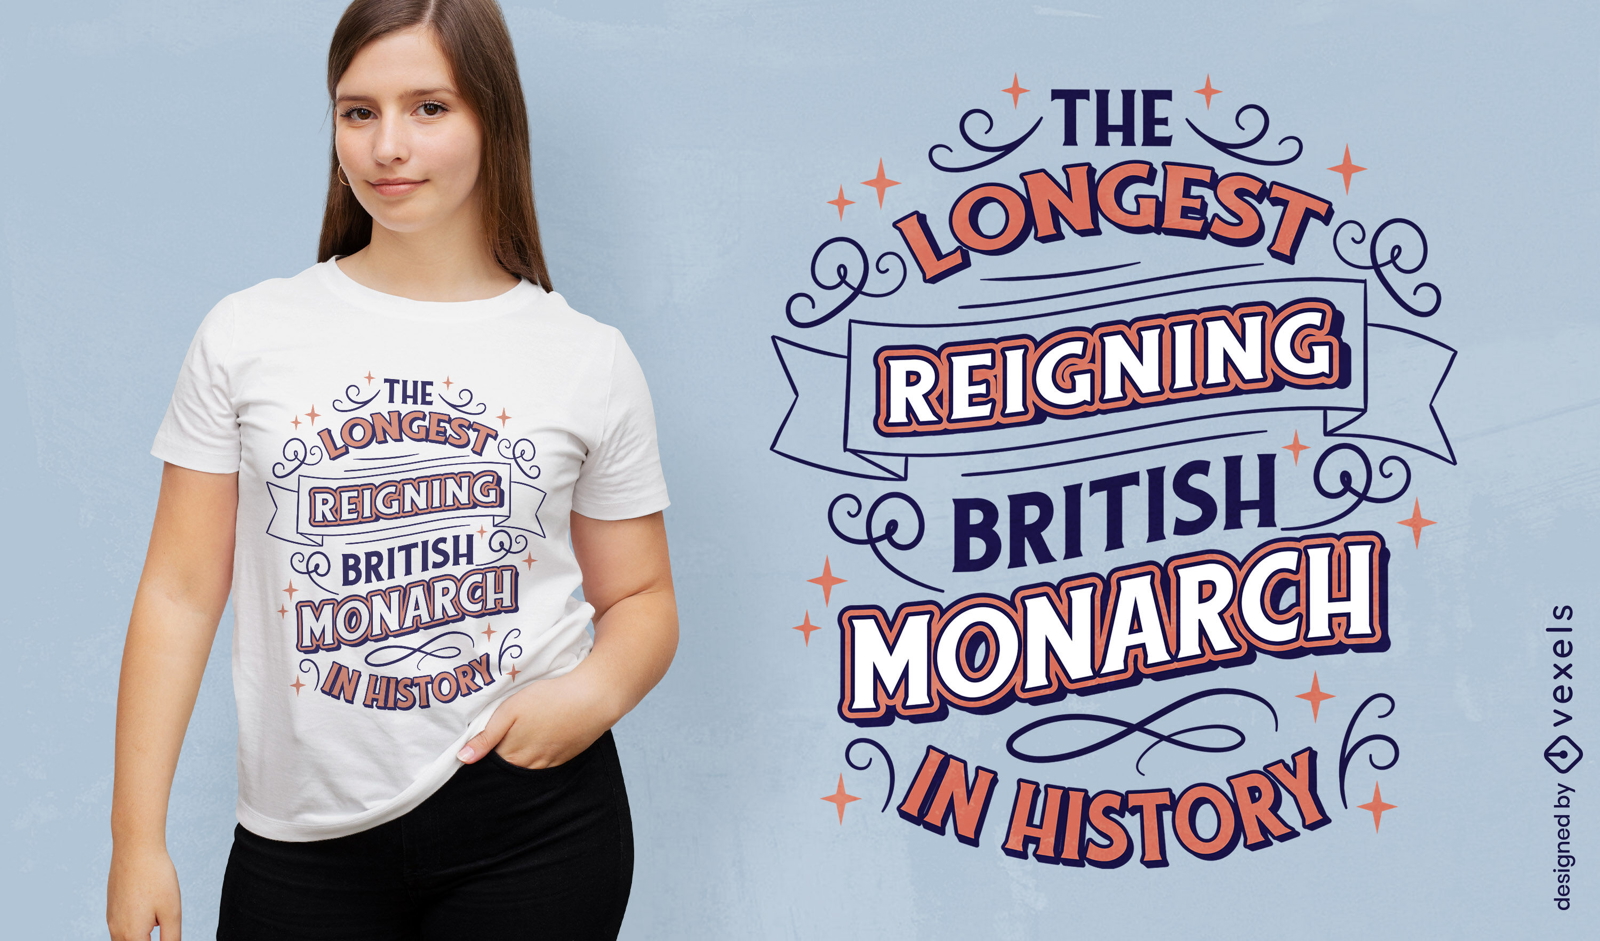 British monarchy quote t-shirt design